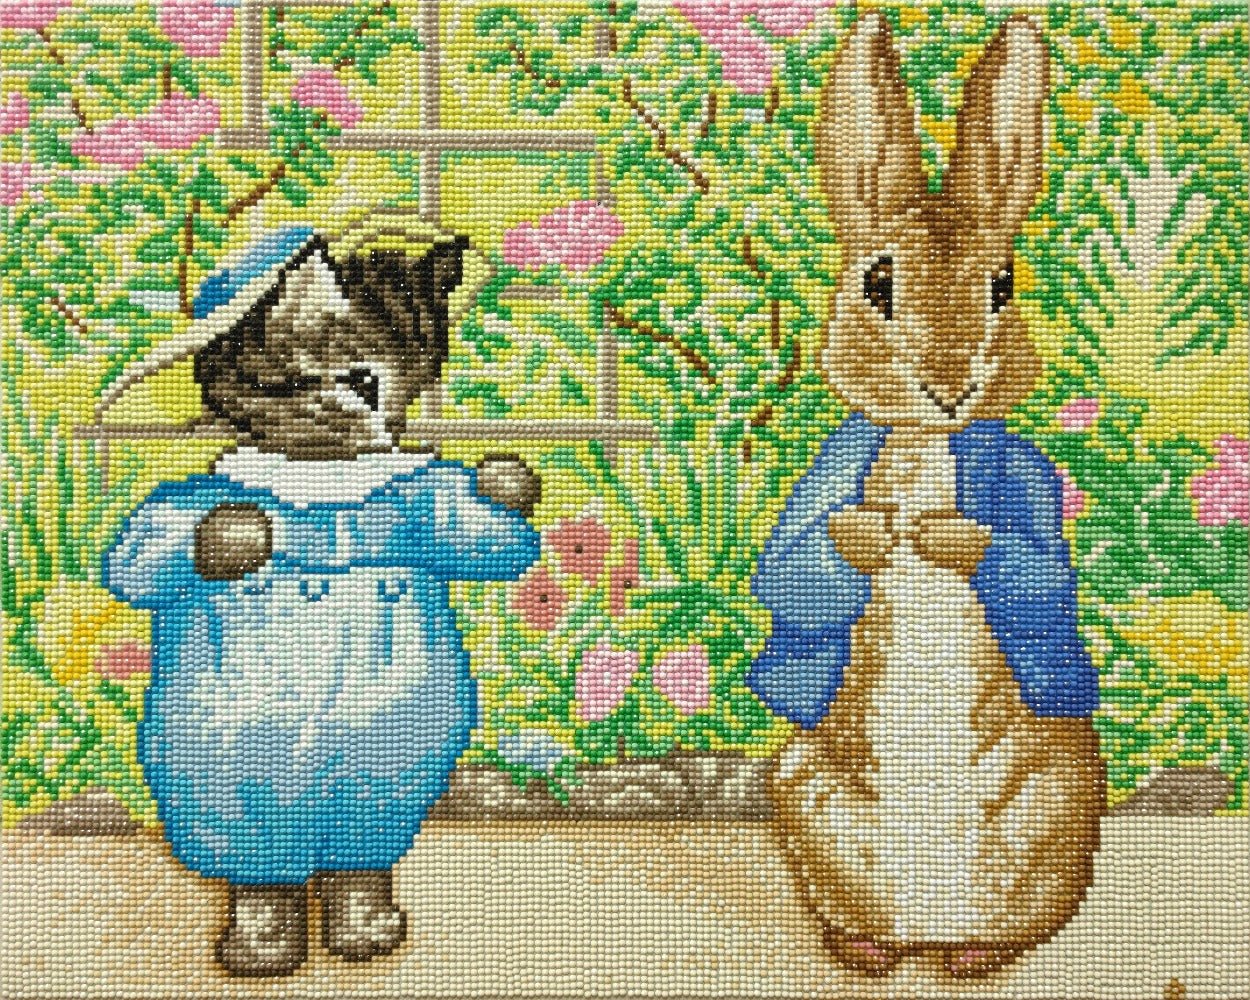 "Peter Rabbit and Tom Kitten" Crystal Art Canvas 40x50cm